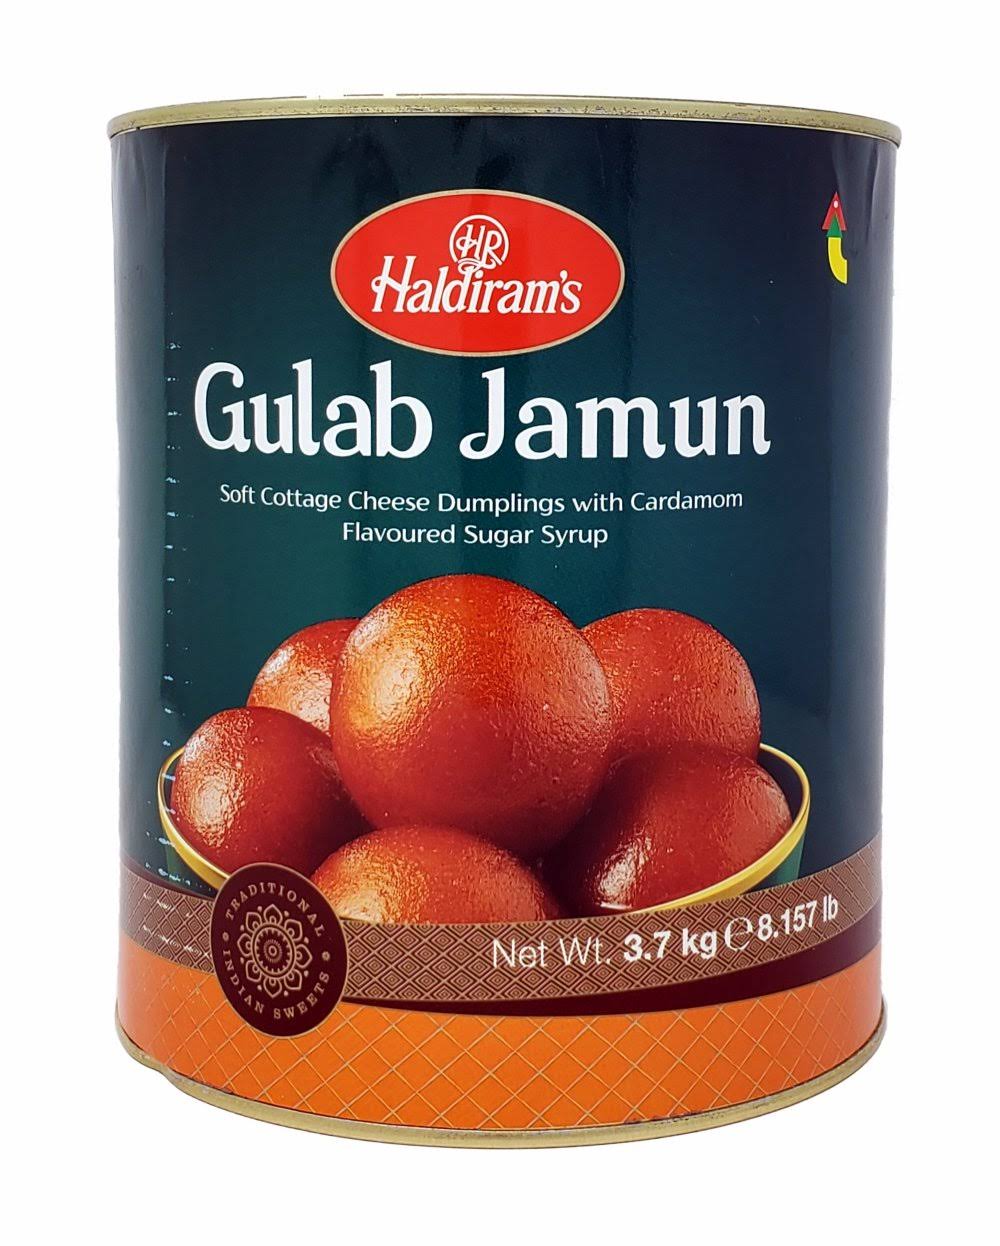 Haldiram's Gulab Jamun 3.7kg